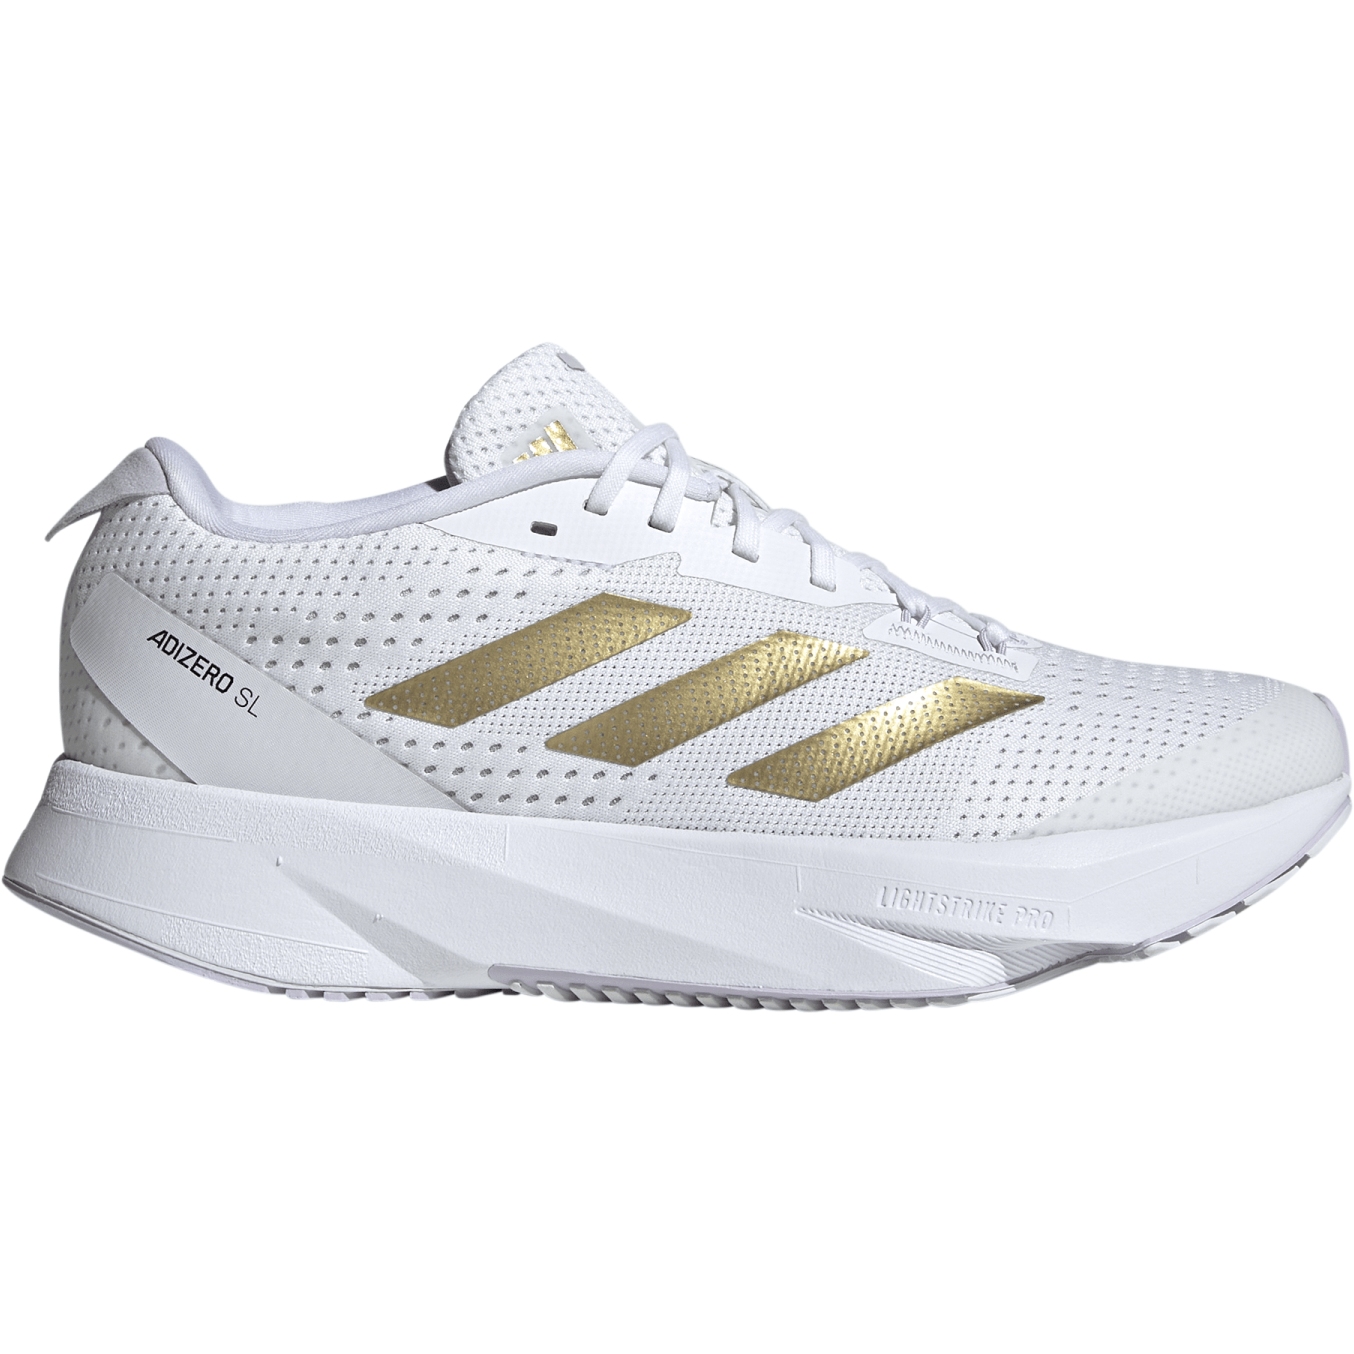 Productfoto van adidas Adizero Superlight Hardloopschoenen Dames - white/gold metal/dash grey ID6934